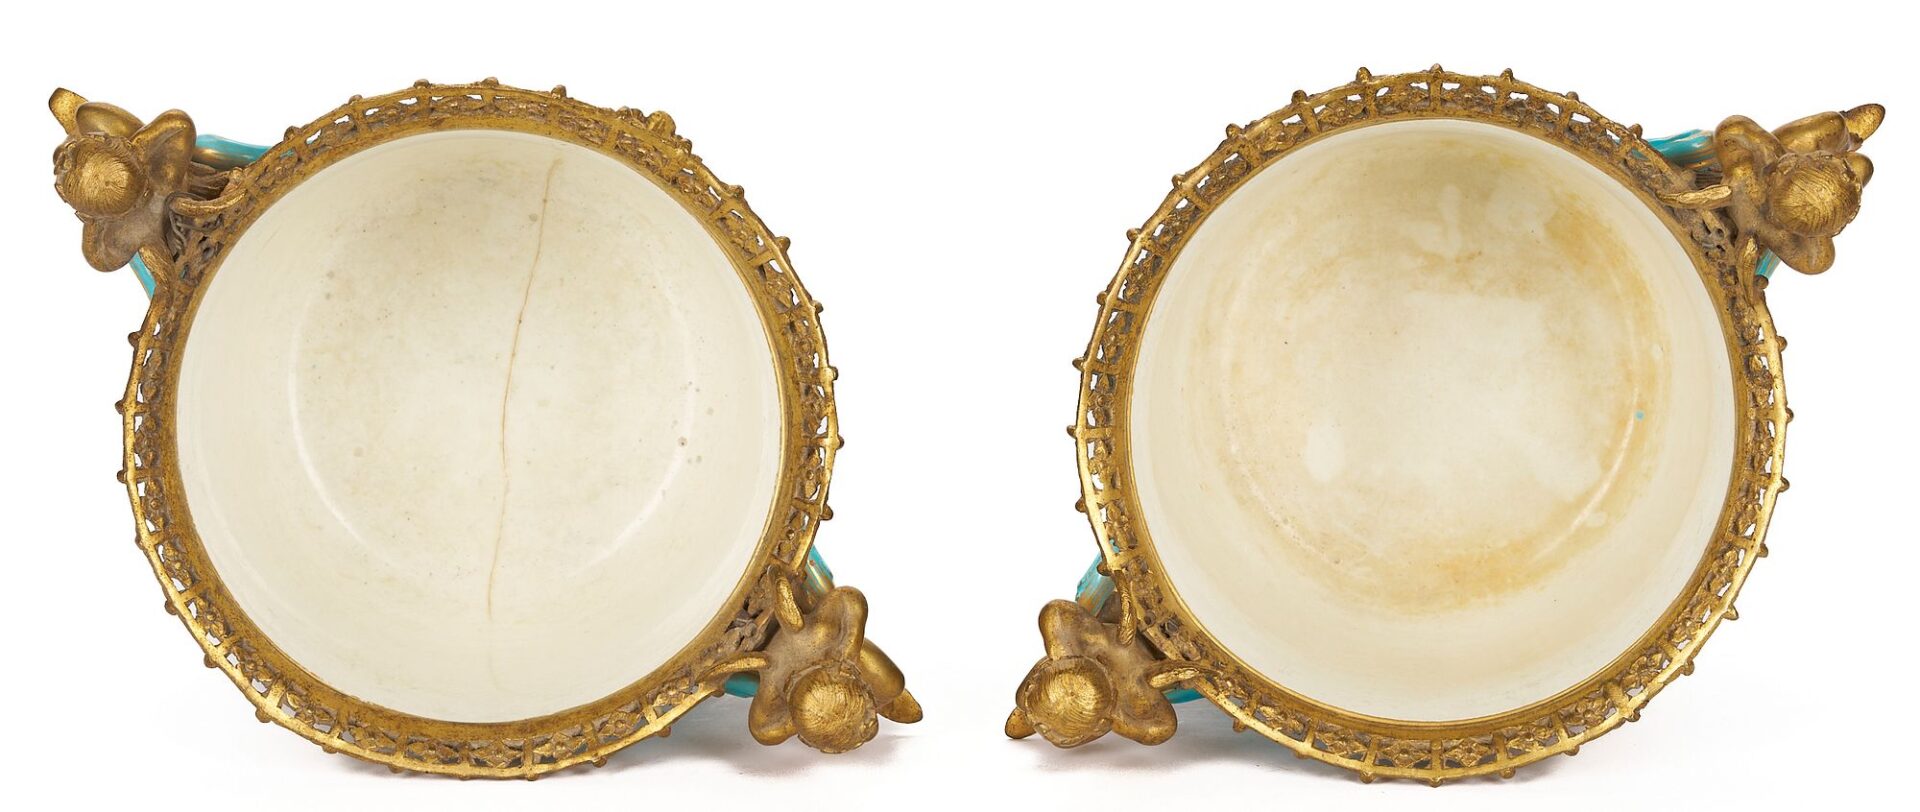 Lot 286: Pair of Sevres Style Porcelain & Ormolu Cachepots